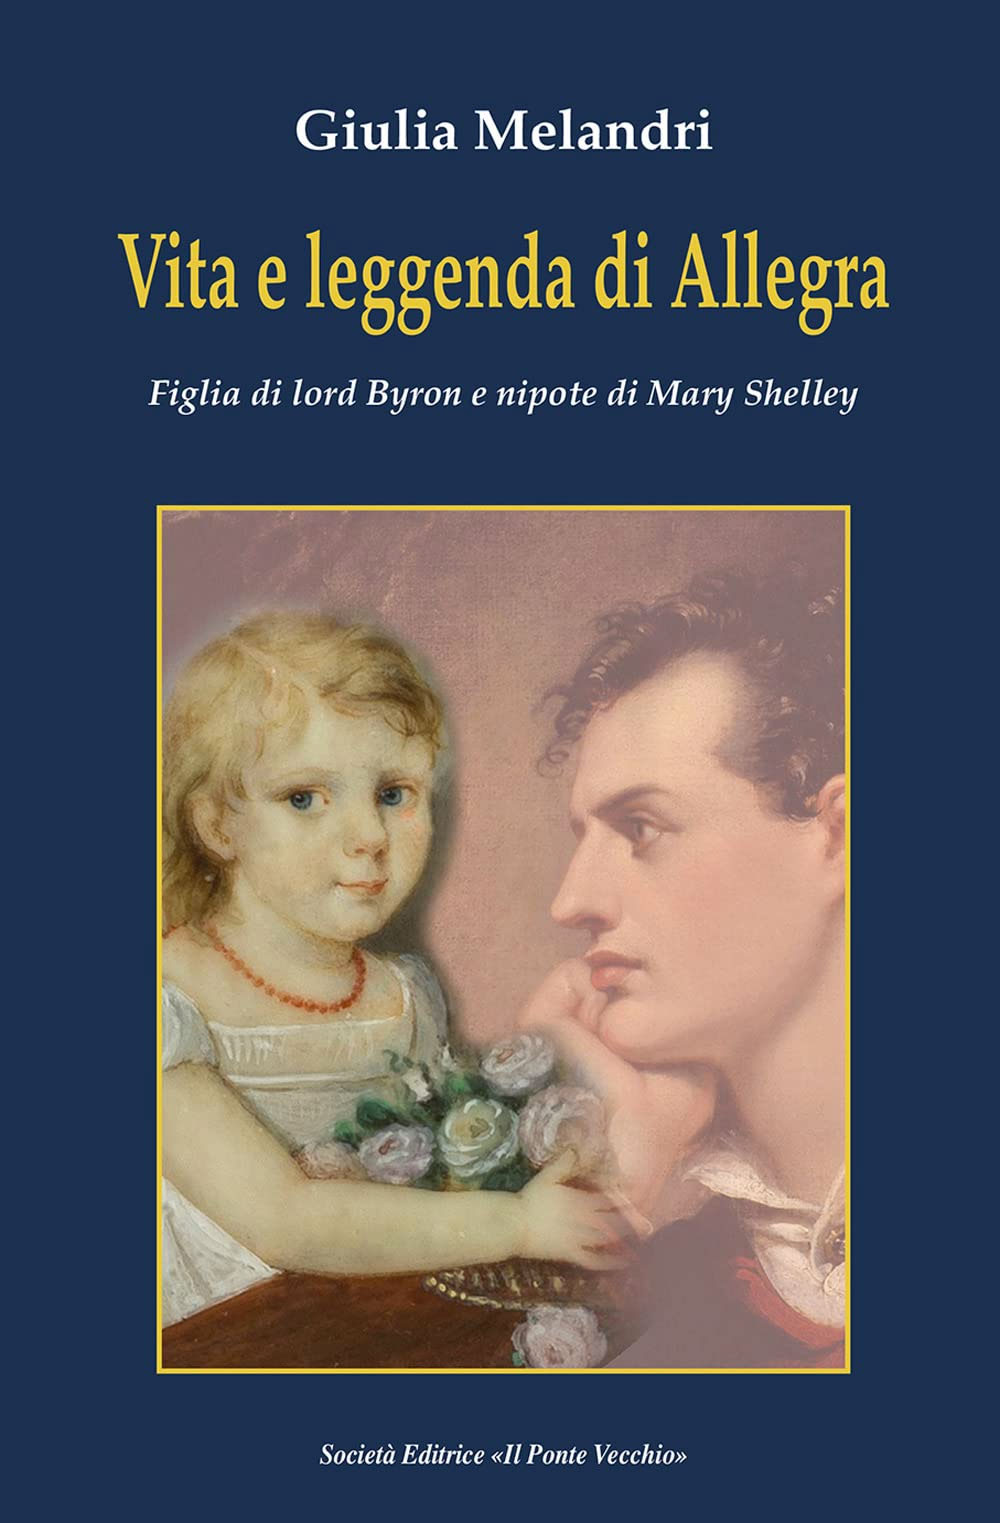 Giulia Melandri - libro su Allegra Byron